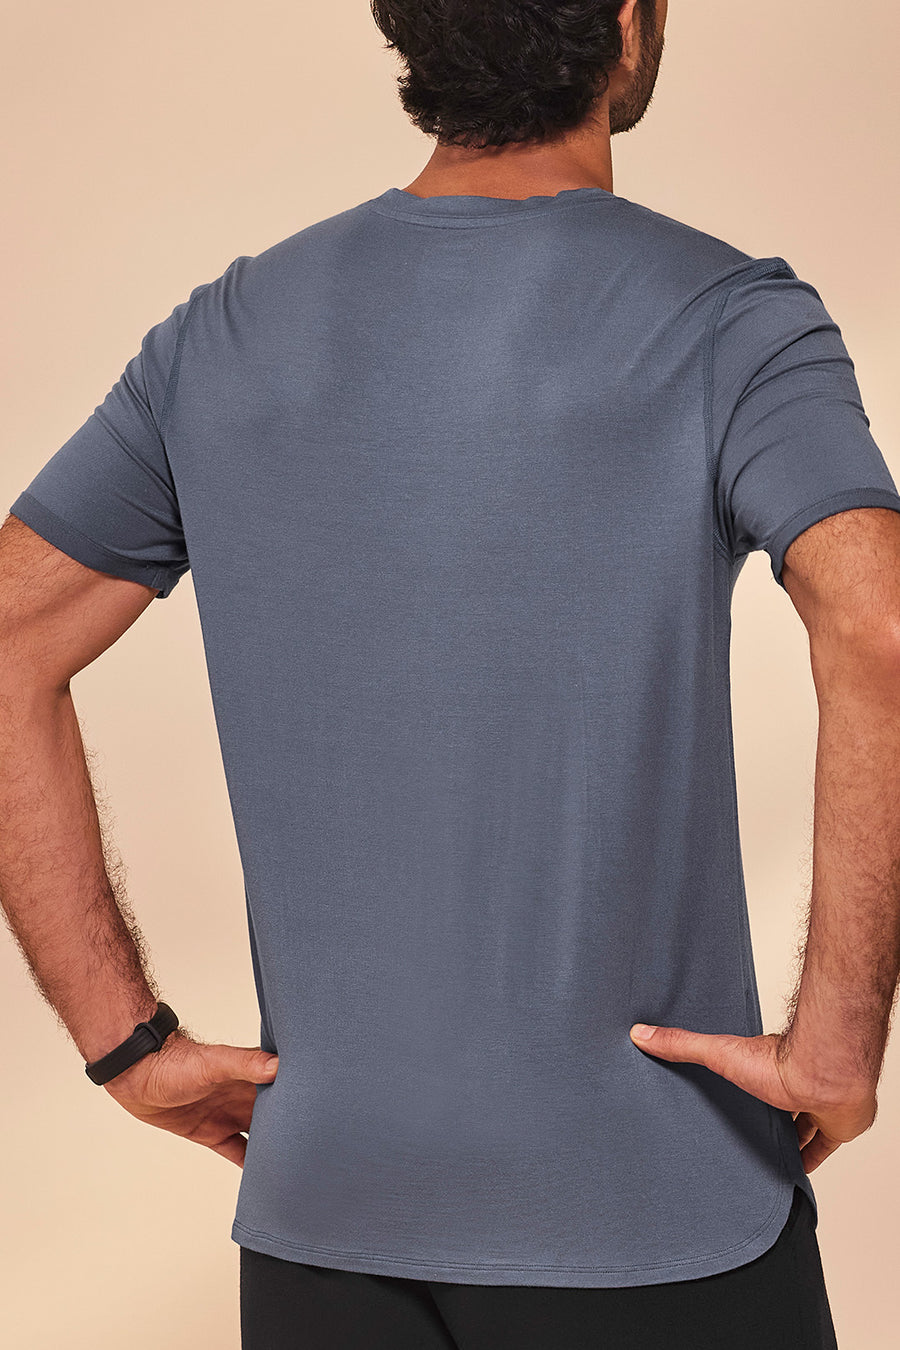 Smooth & Easy T-shirt Blue - Sensing